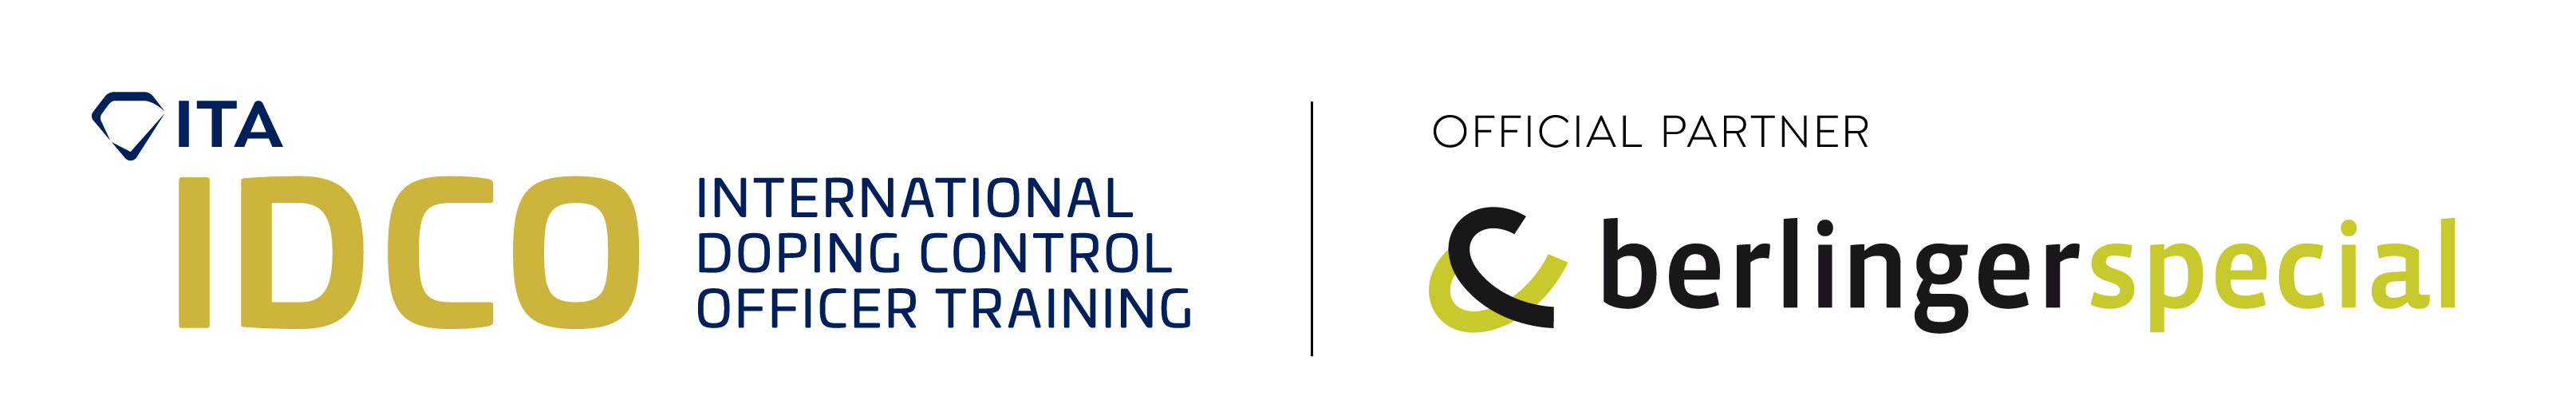 Raising and harmonising the standards of doping controls worldwide: one year of the ITA IDCO Training Program